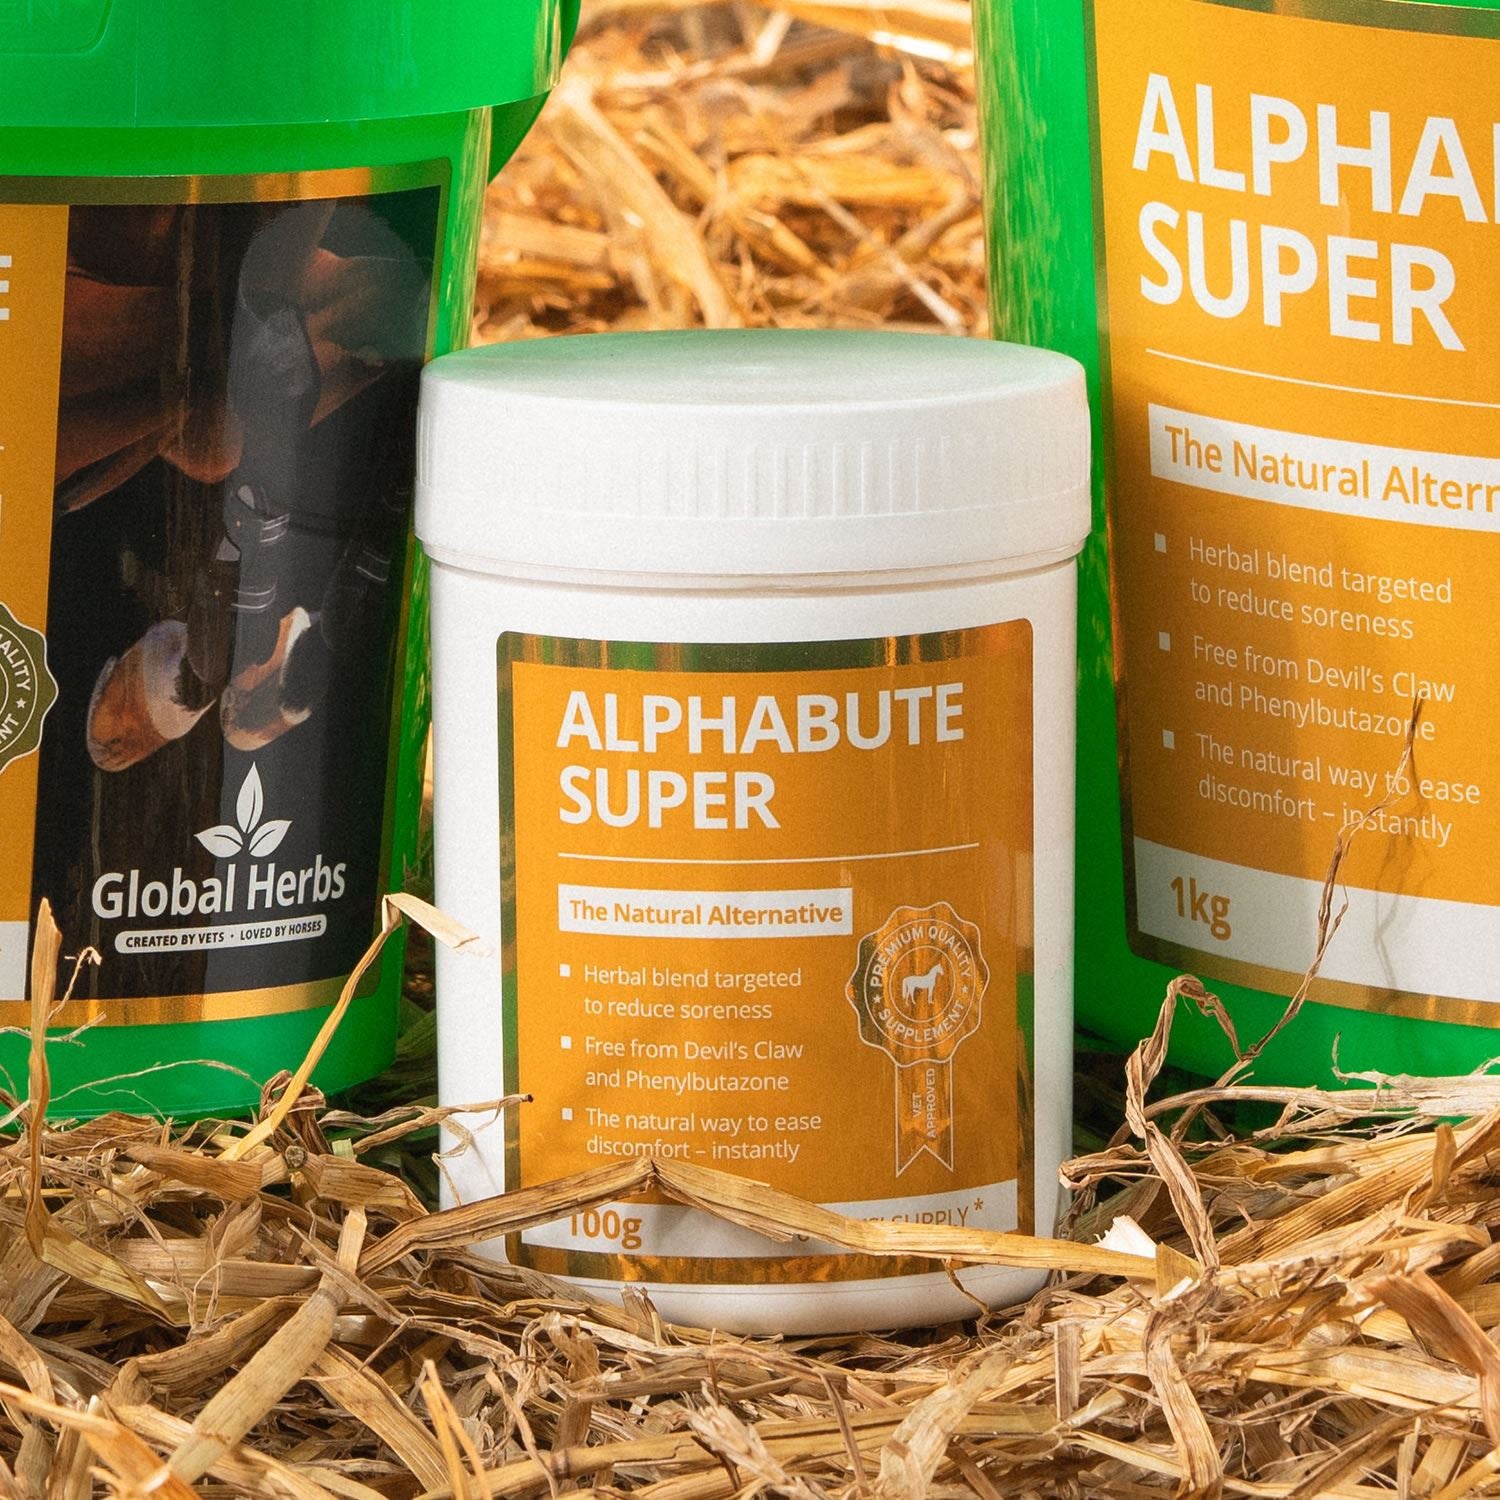 Global Herbs Alphabute Super - Just Horse Riders